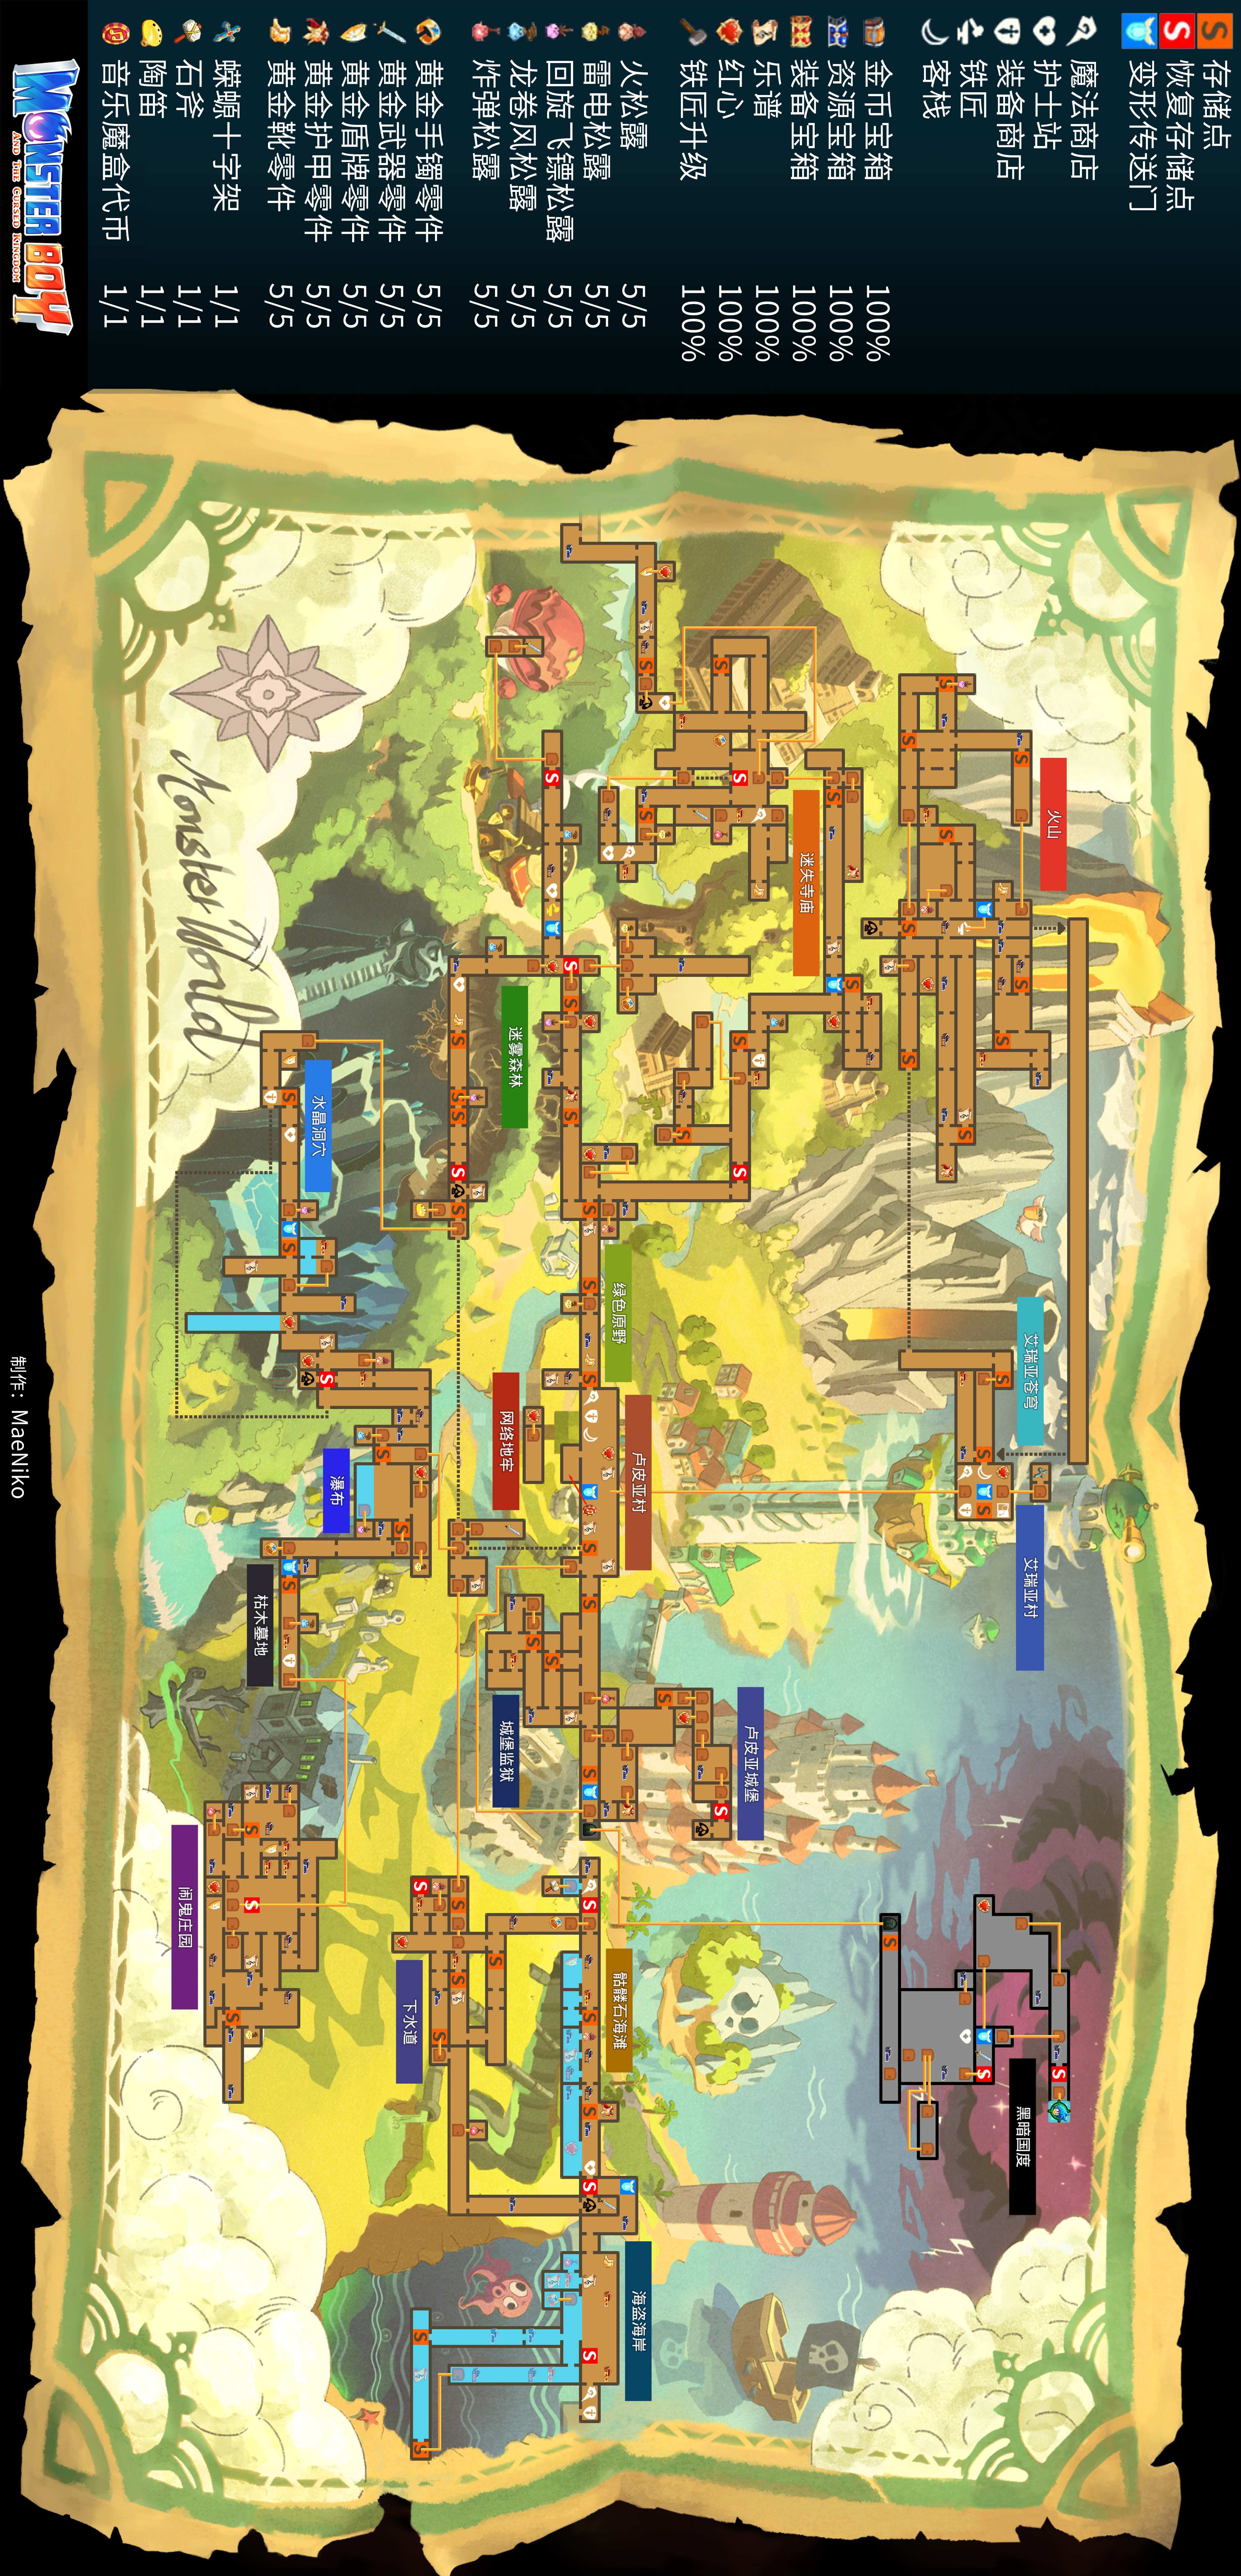 【PC游戏】1000+款 类银河战士恶魔城+大地图探险游戏 安利和测评 71~80-第18张